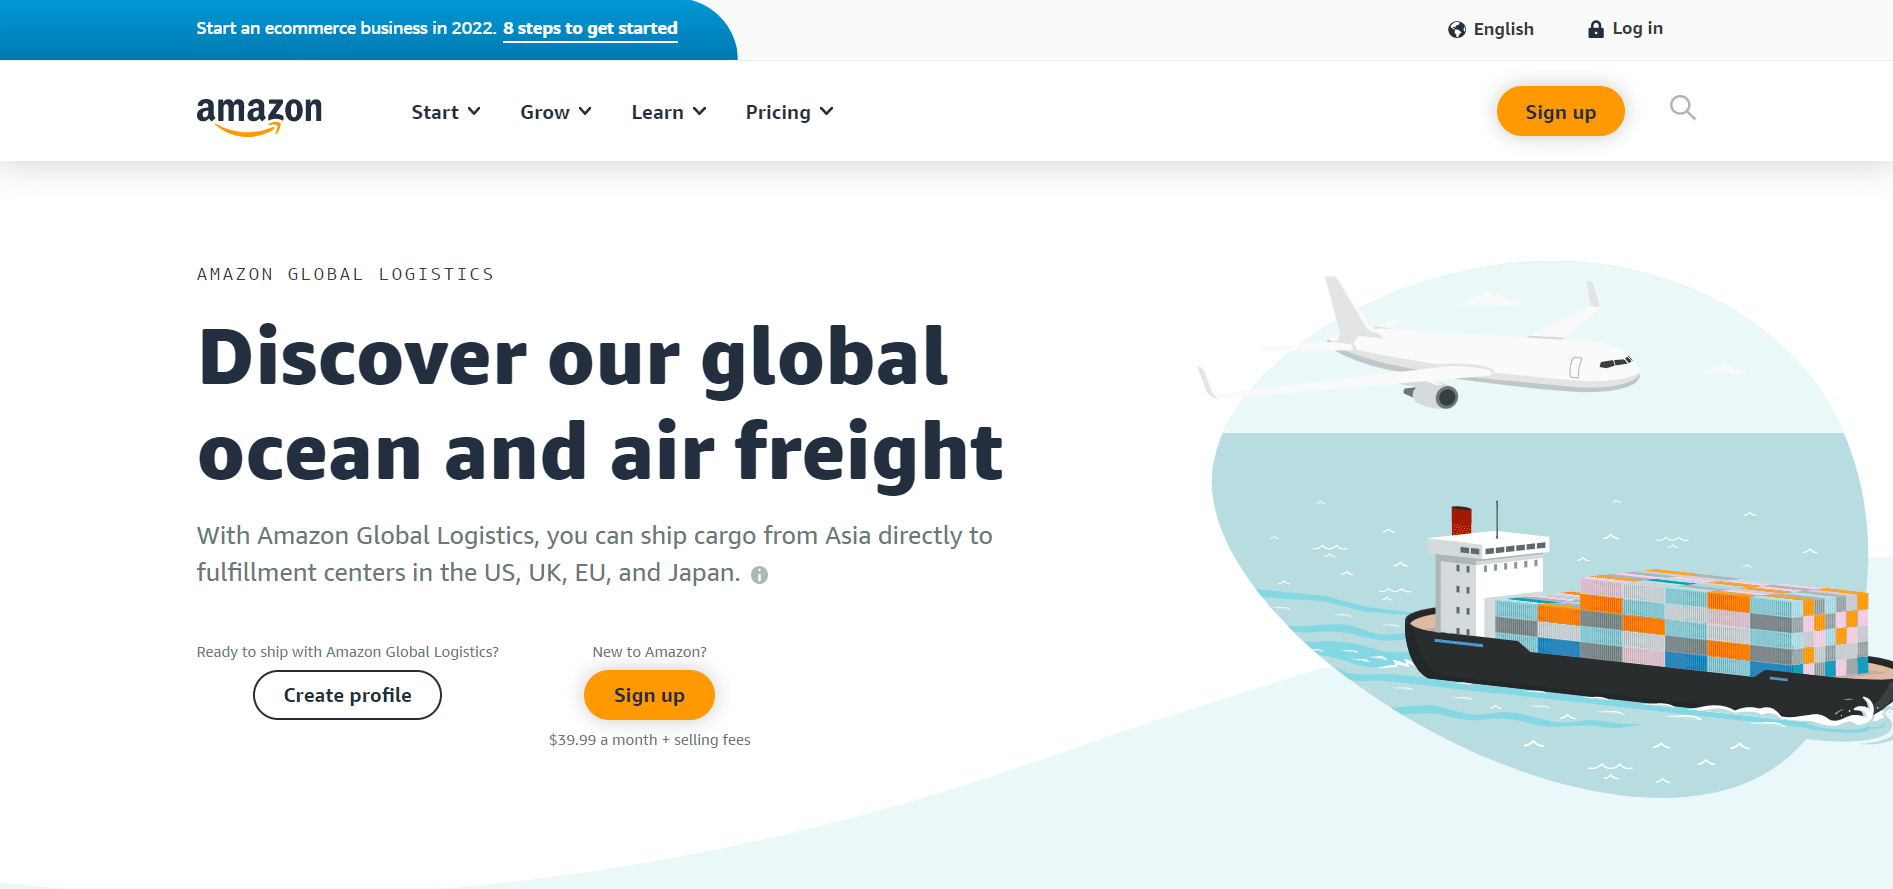 Amazon Global Logistics